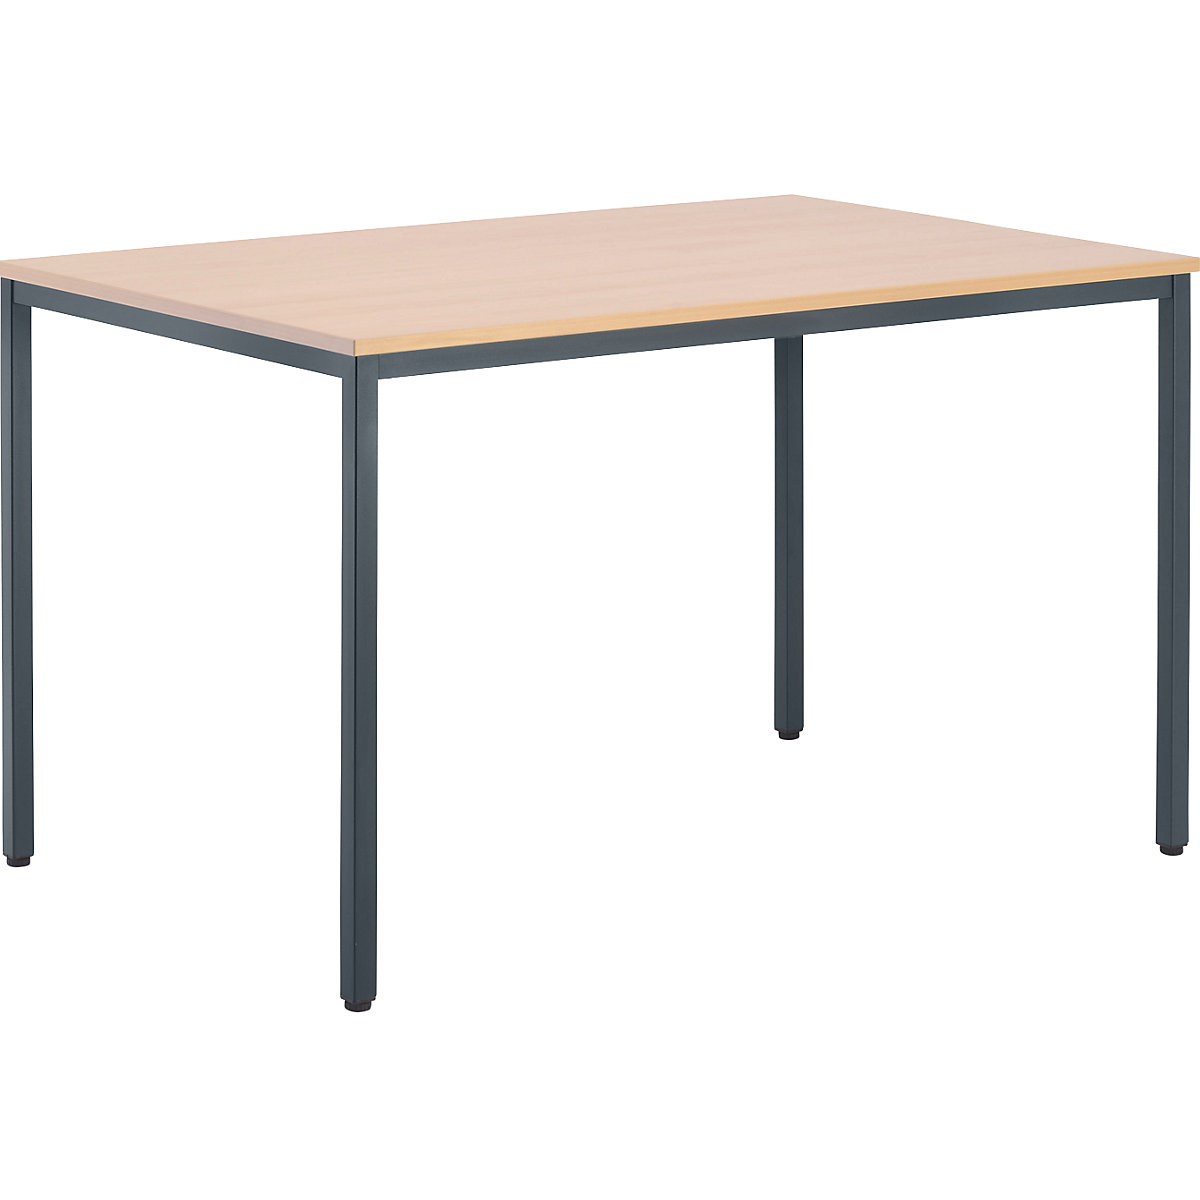 Multifunctionele tafel – eurokraft basic, h x b x d = 720 x 1200 x 800 mm, blad beukenhoutdecor, frame basaltgrijs-5